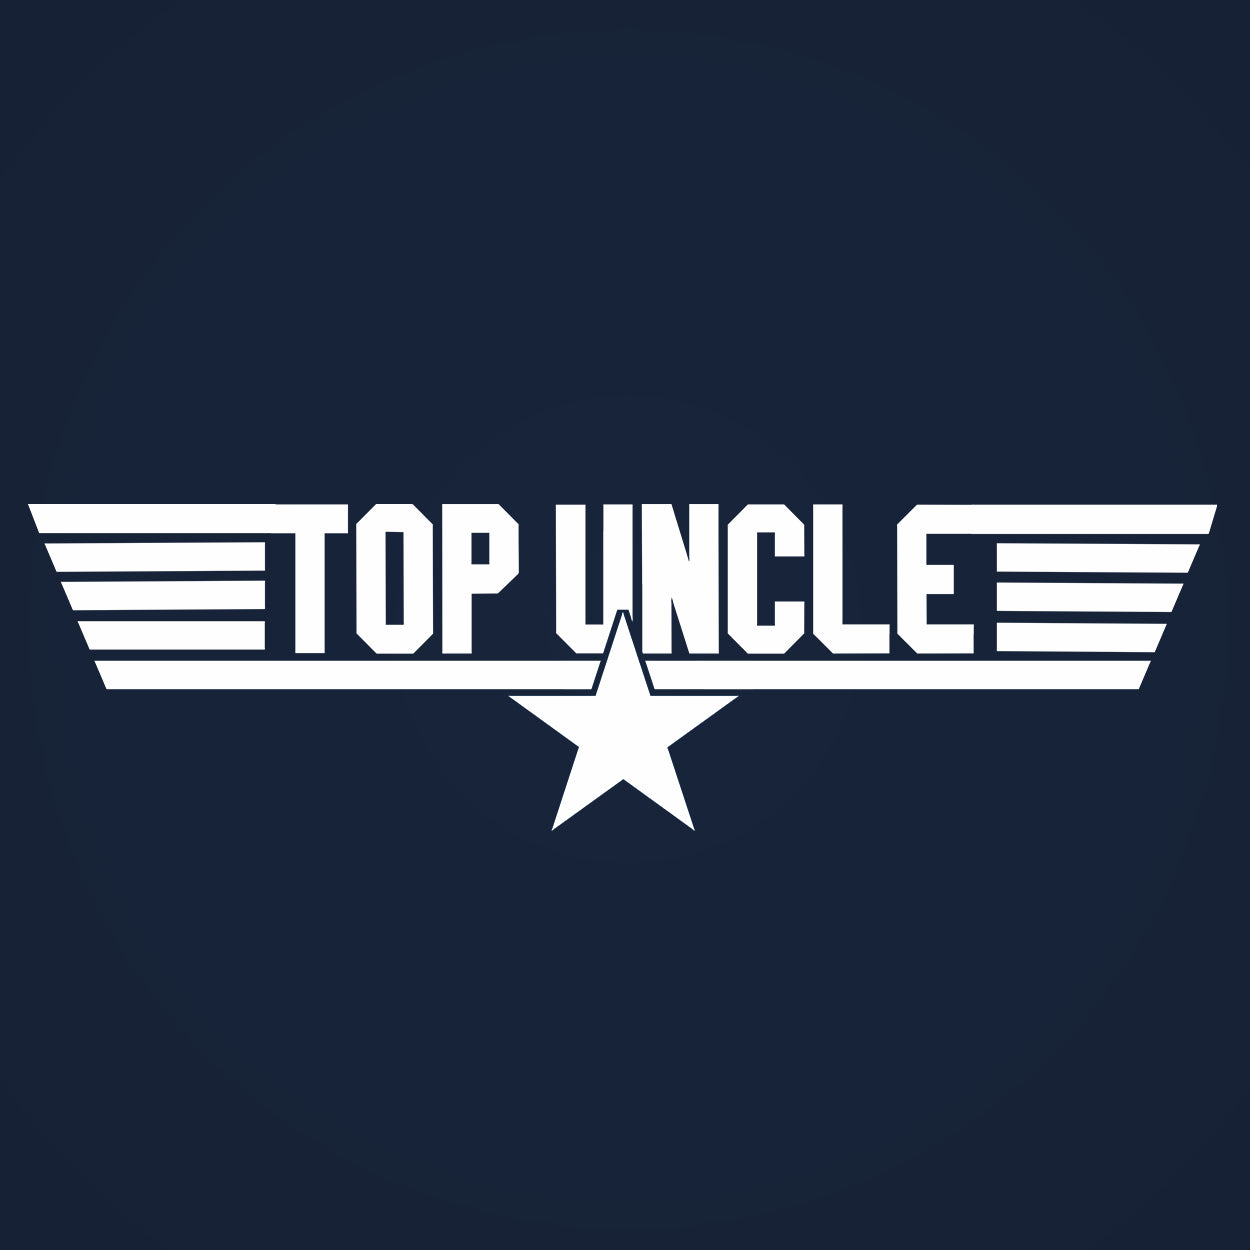 Top Uncle Tshirt - Donkey Tees